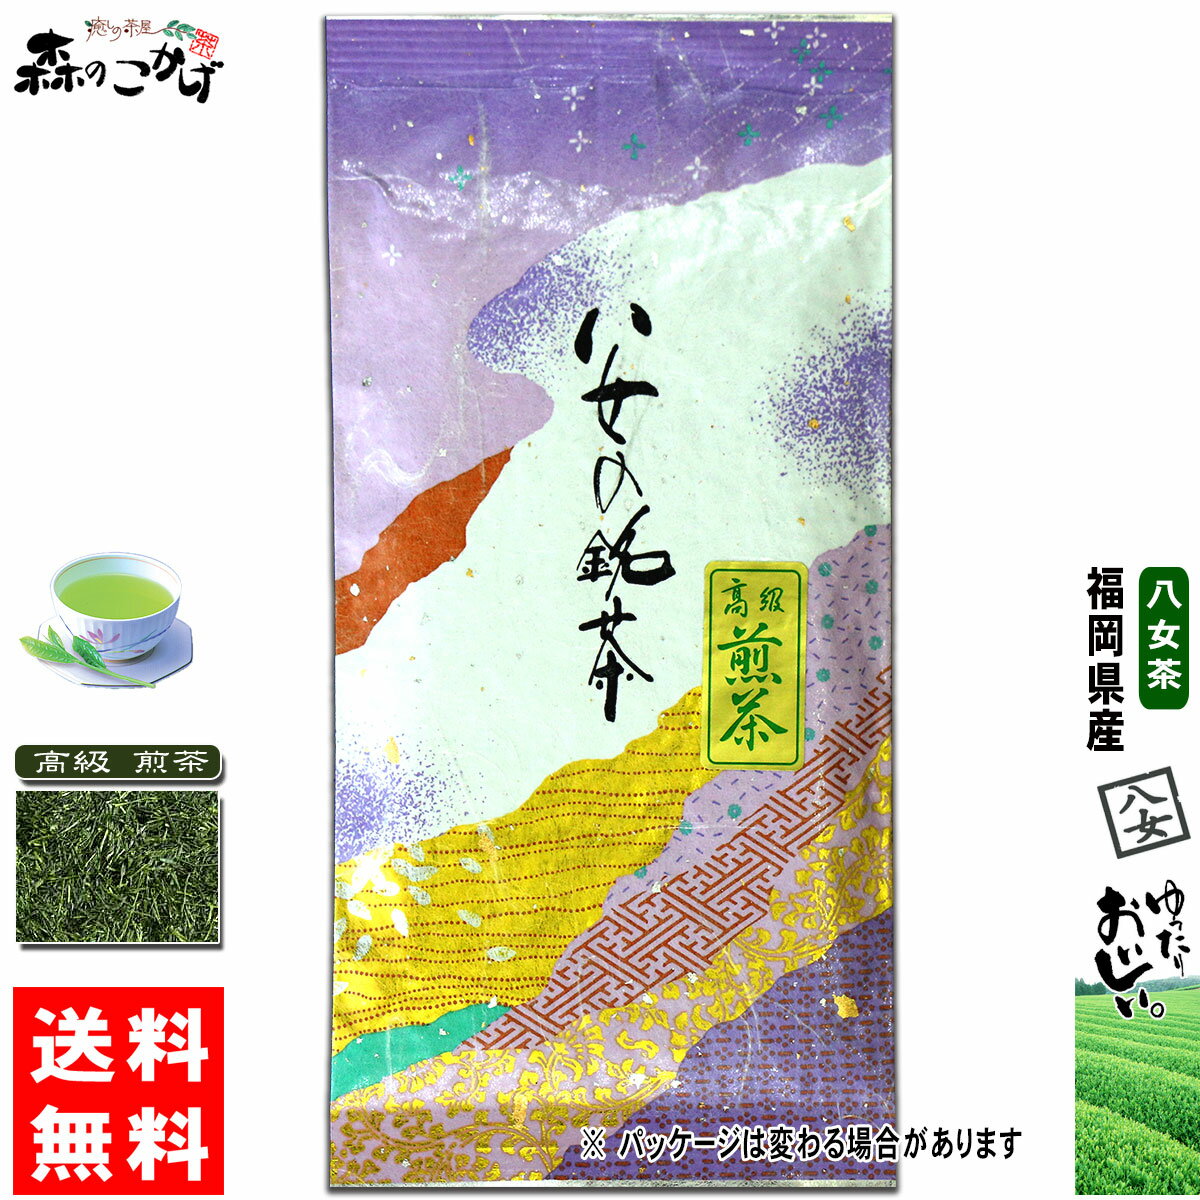 Y1【送料無料】 高級 煎茶 (100g) 福岡